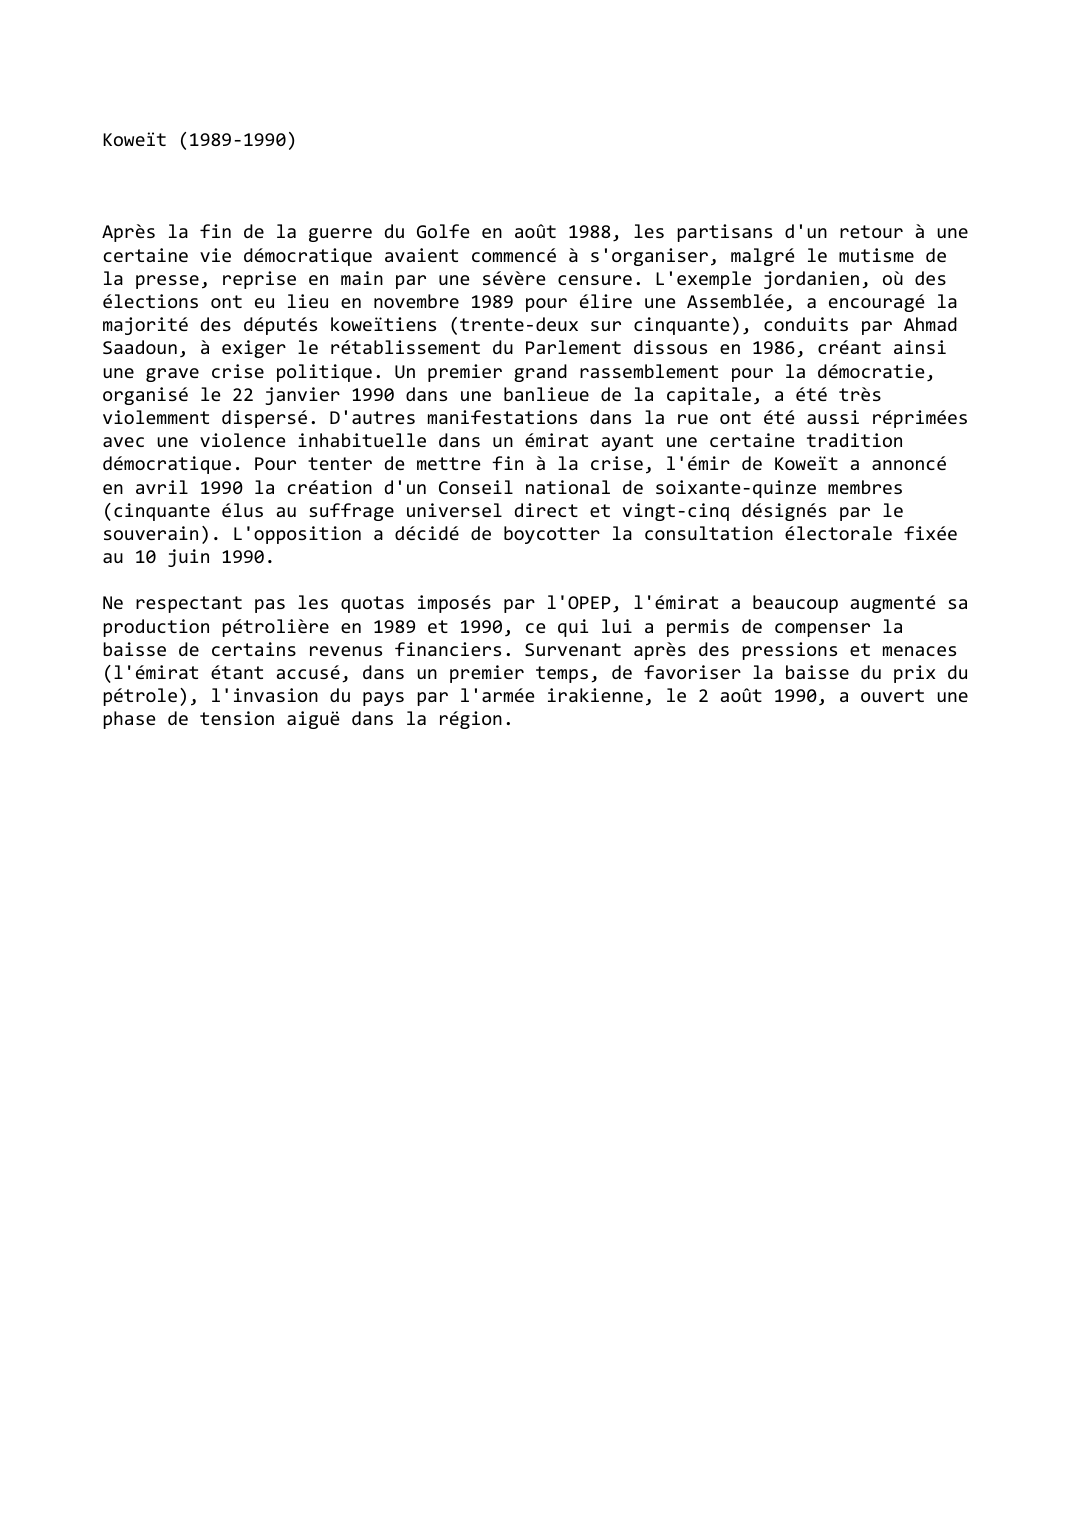 Prévisualisation du document Koweït (1989-1990)